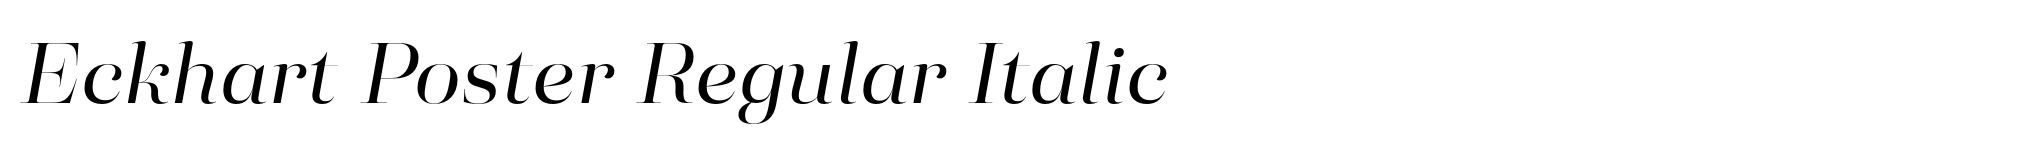 Eckhart Poster Regular Italic image